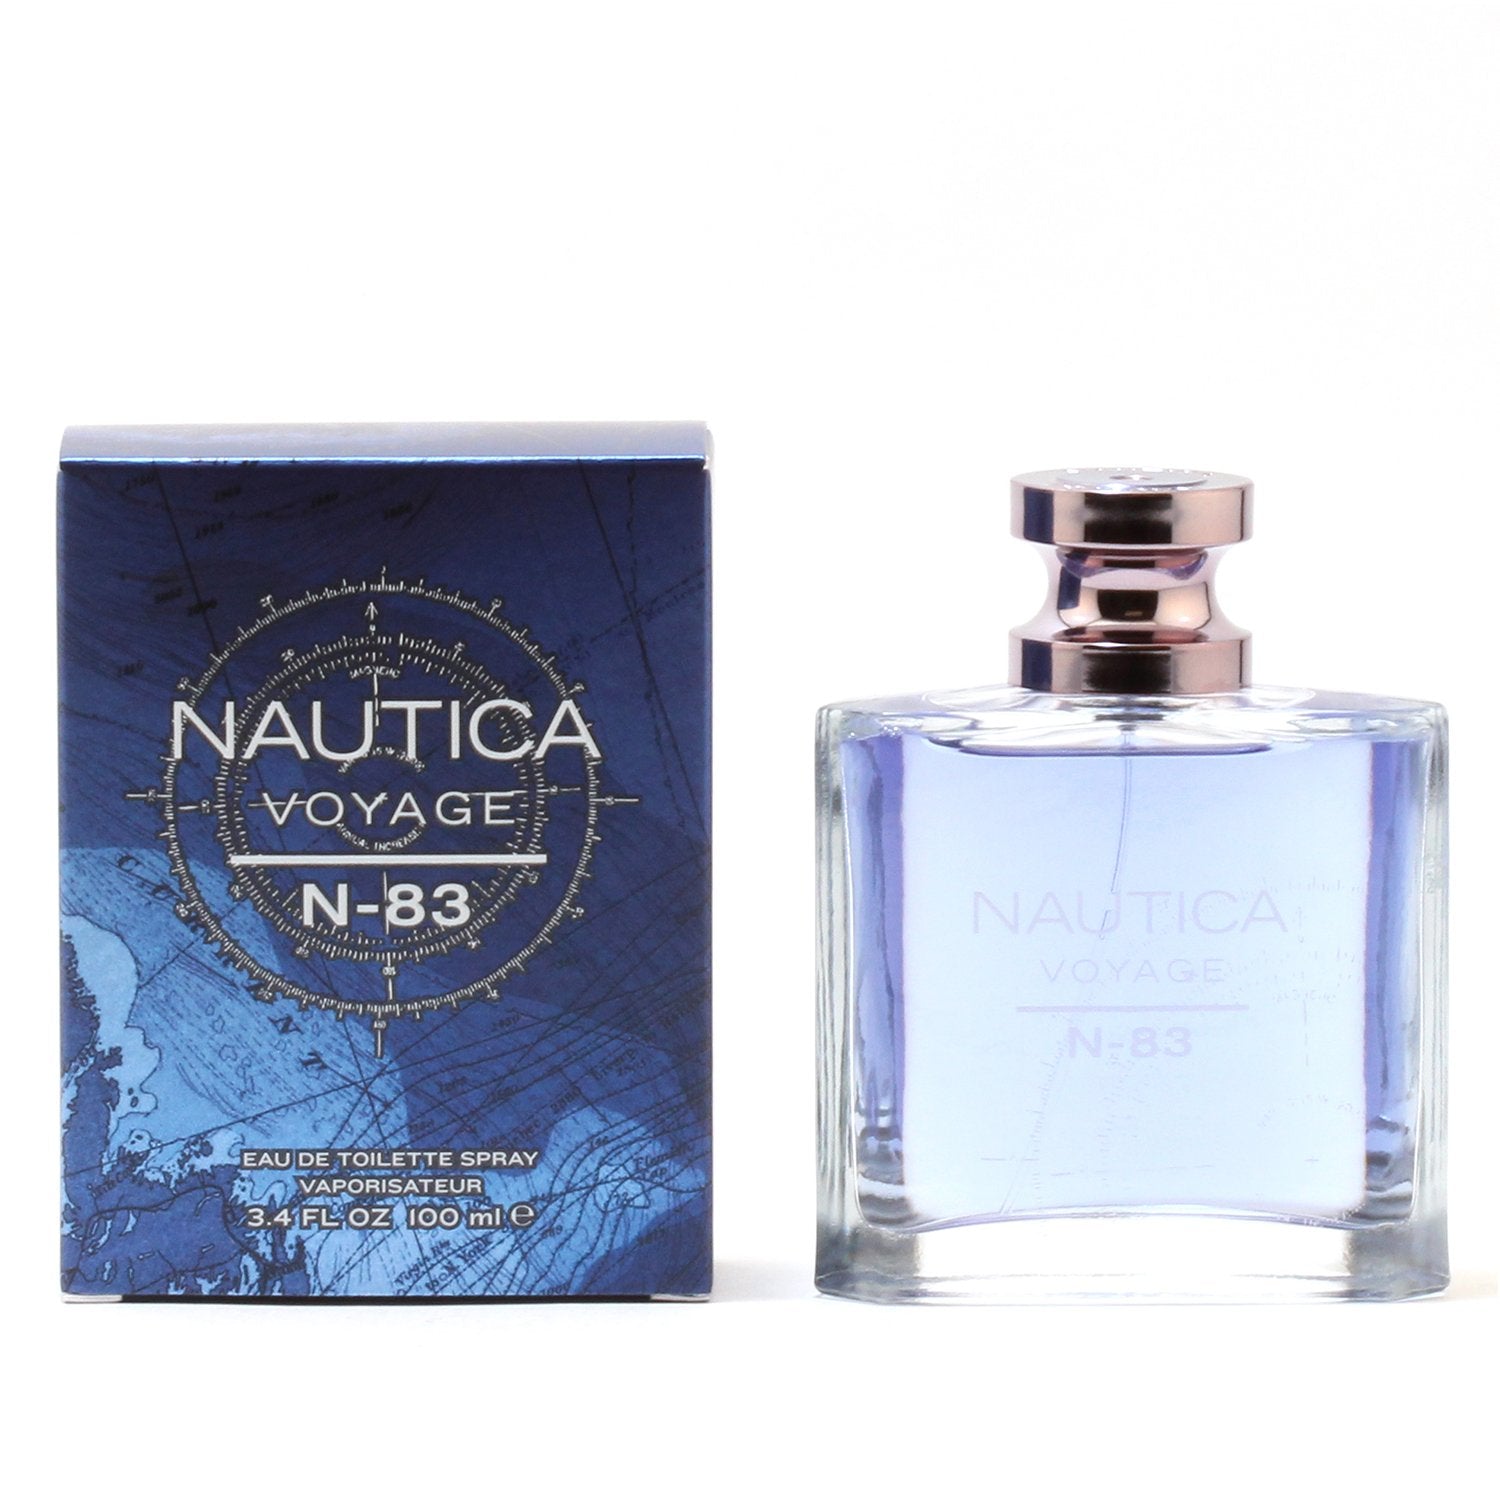 NAUTICA VOYAGE N-83 FOR MEN - EAU DE TOILETTE SPRAY, 3.4 OZ – Fragrance Room